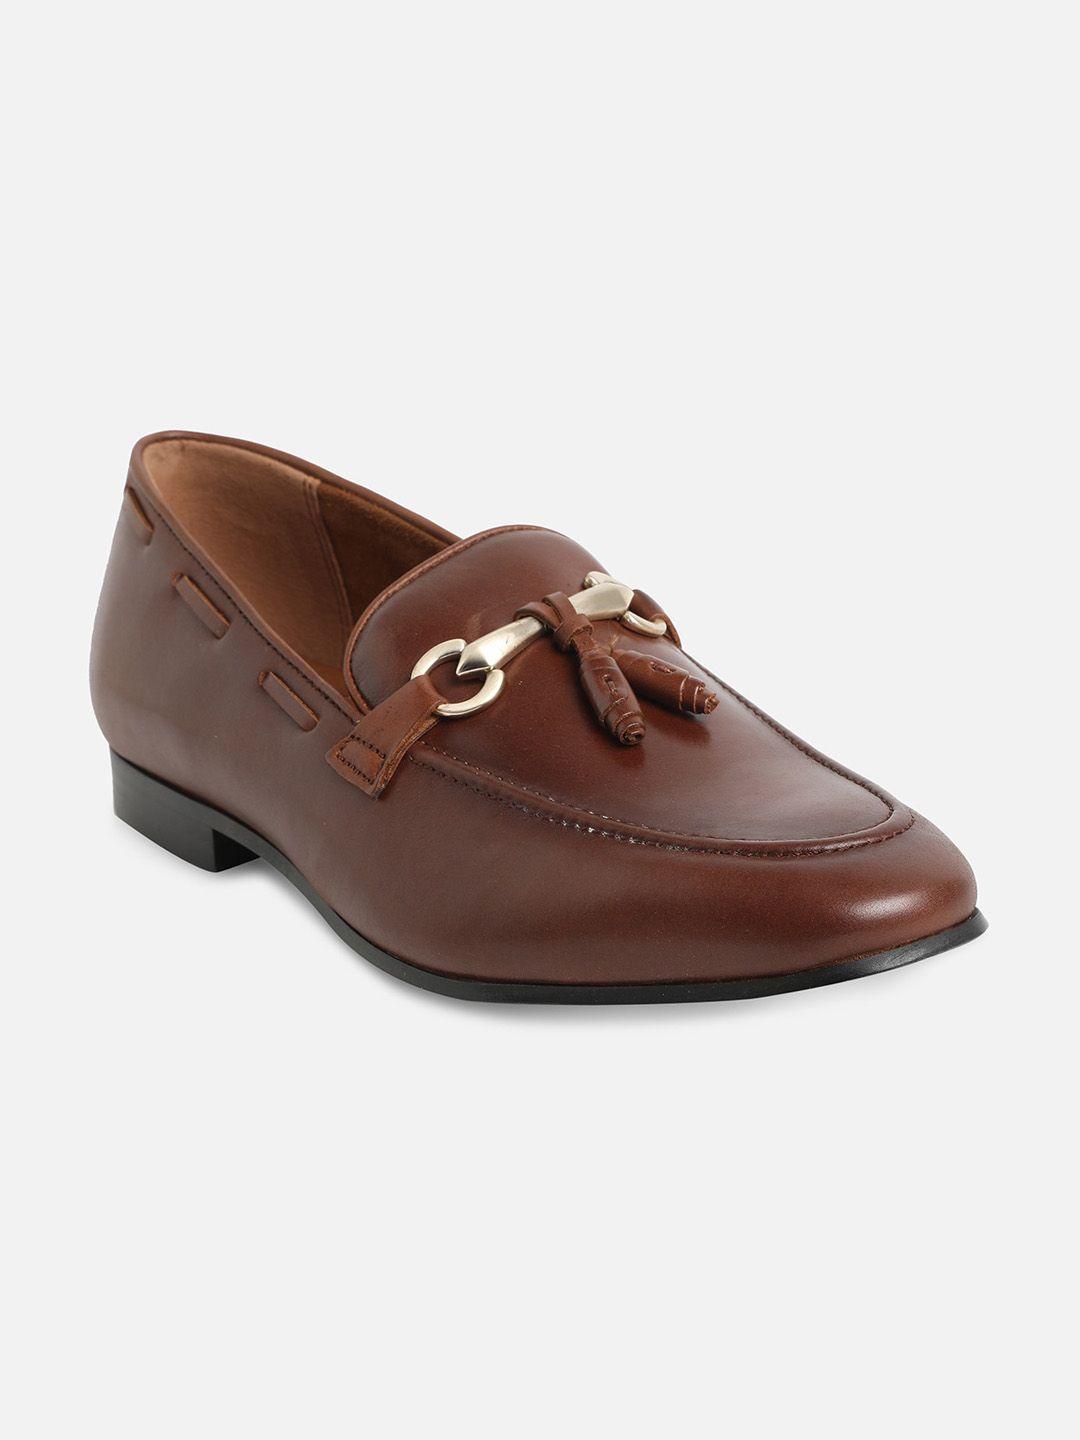 aldo-men-brown-leather-solid-boat-shoes